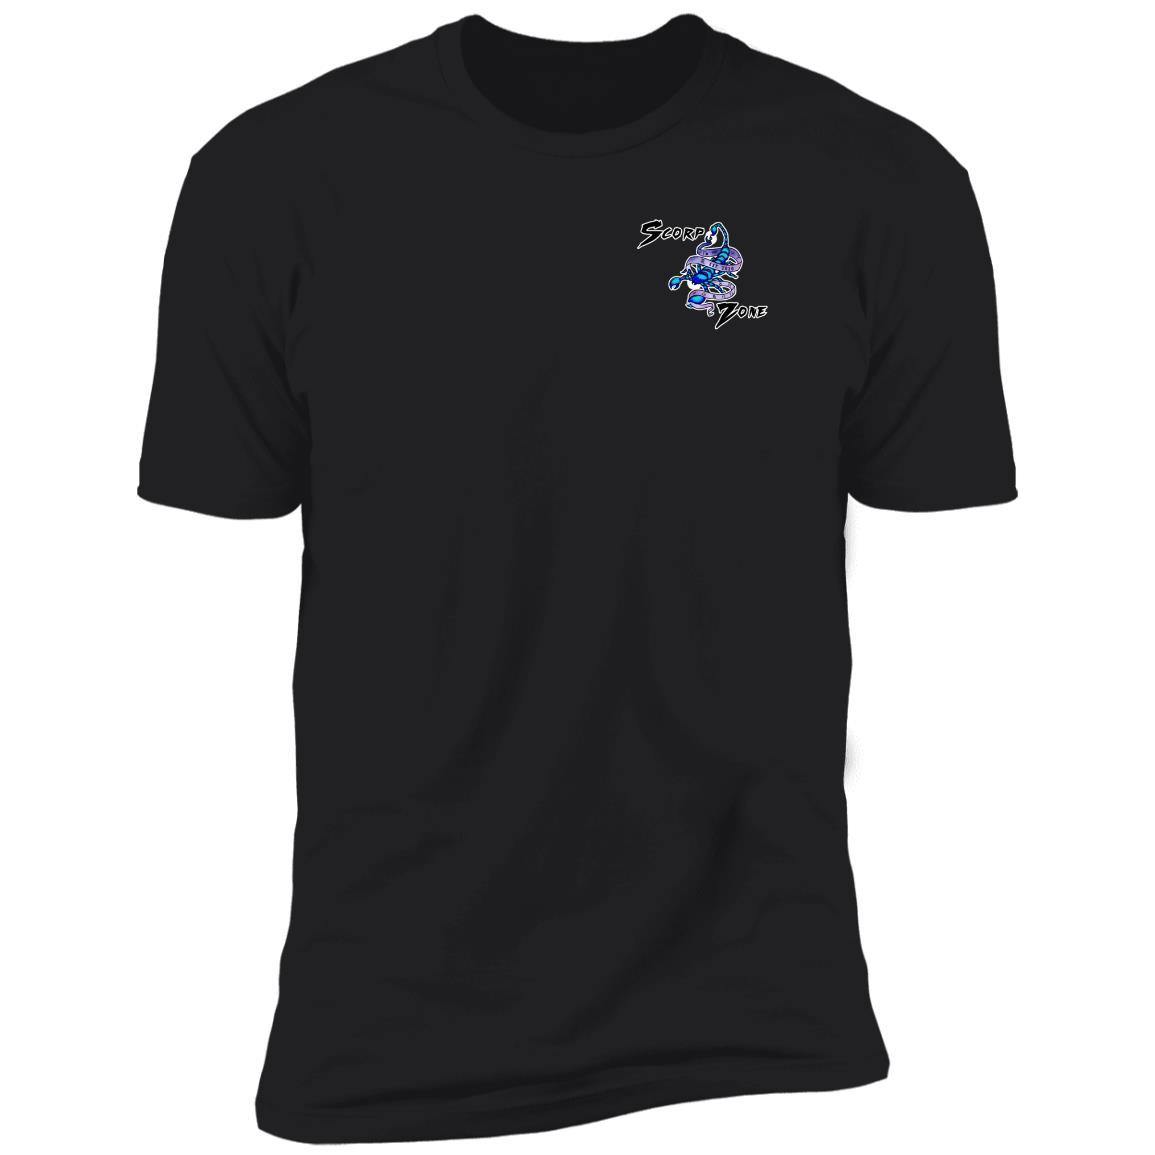 Gemini Design On Back and Small Scorp Zone Logo On Front - Premium Short Sleeve T-Shirt - ScorpZone